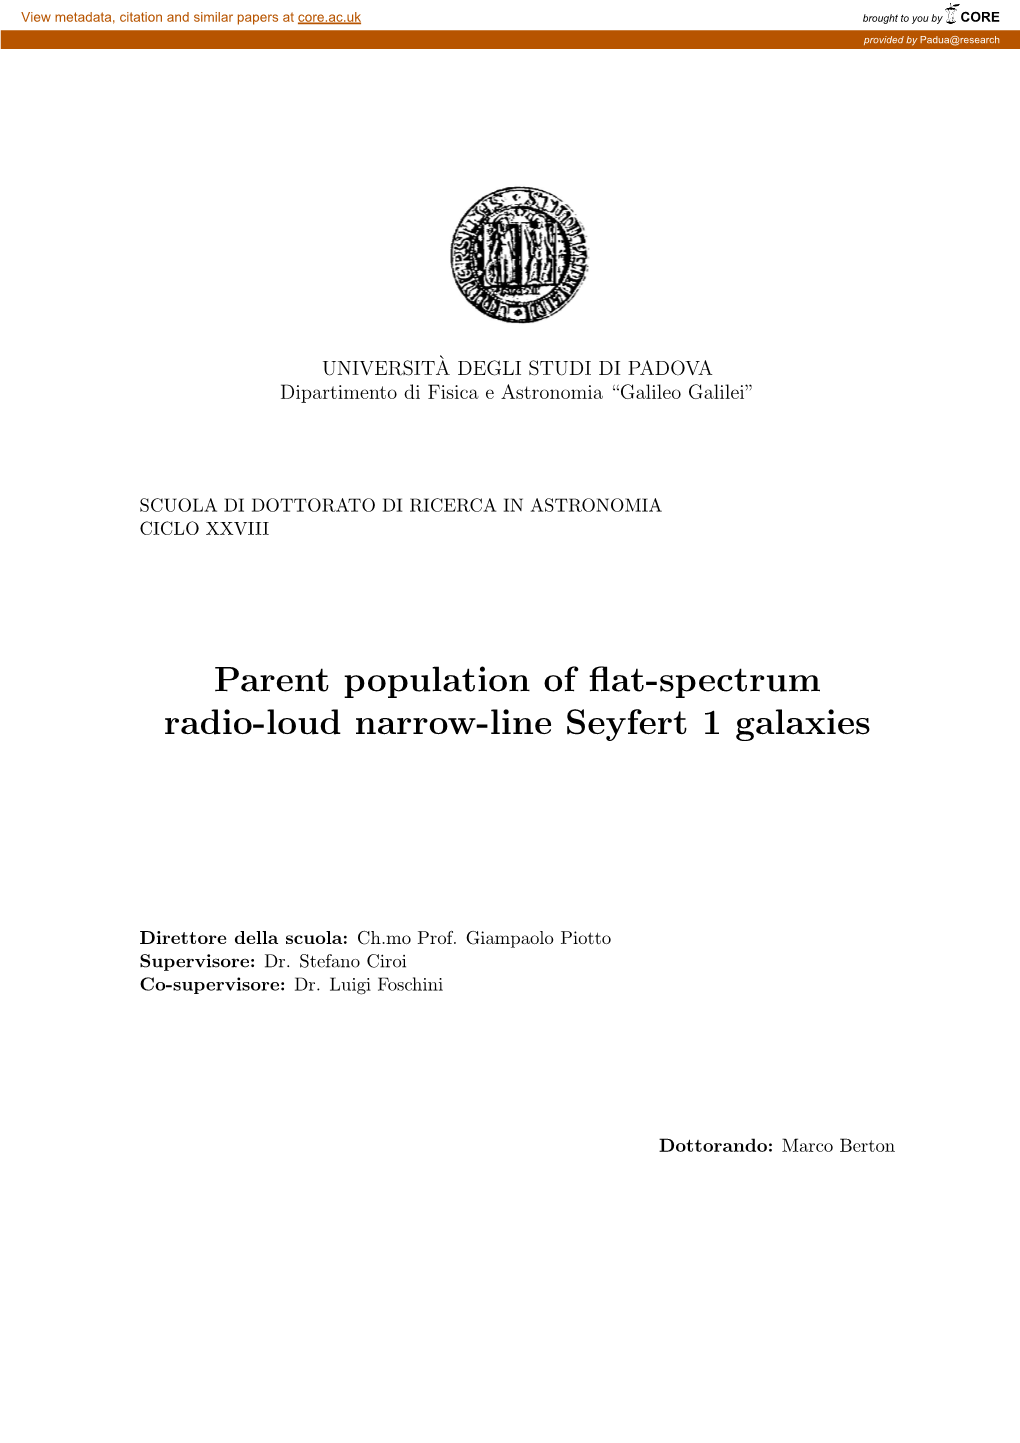 Parent Population of Flat-Spectrum Radio-Loud Narrow-Line Seyfert 1